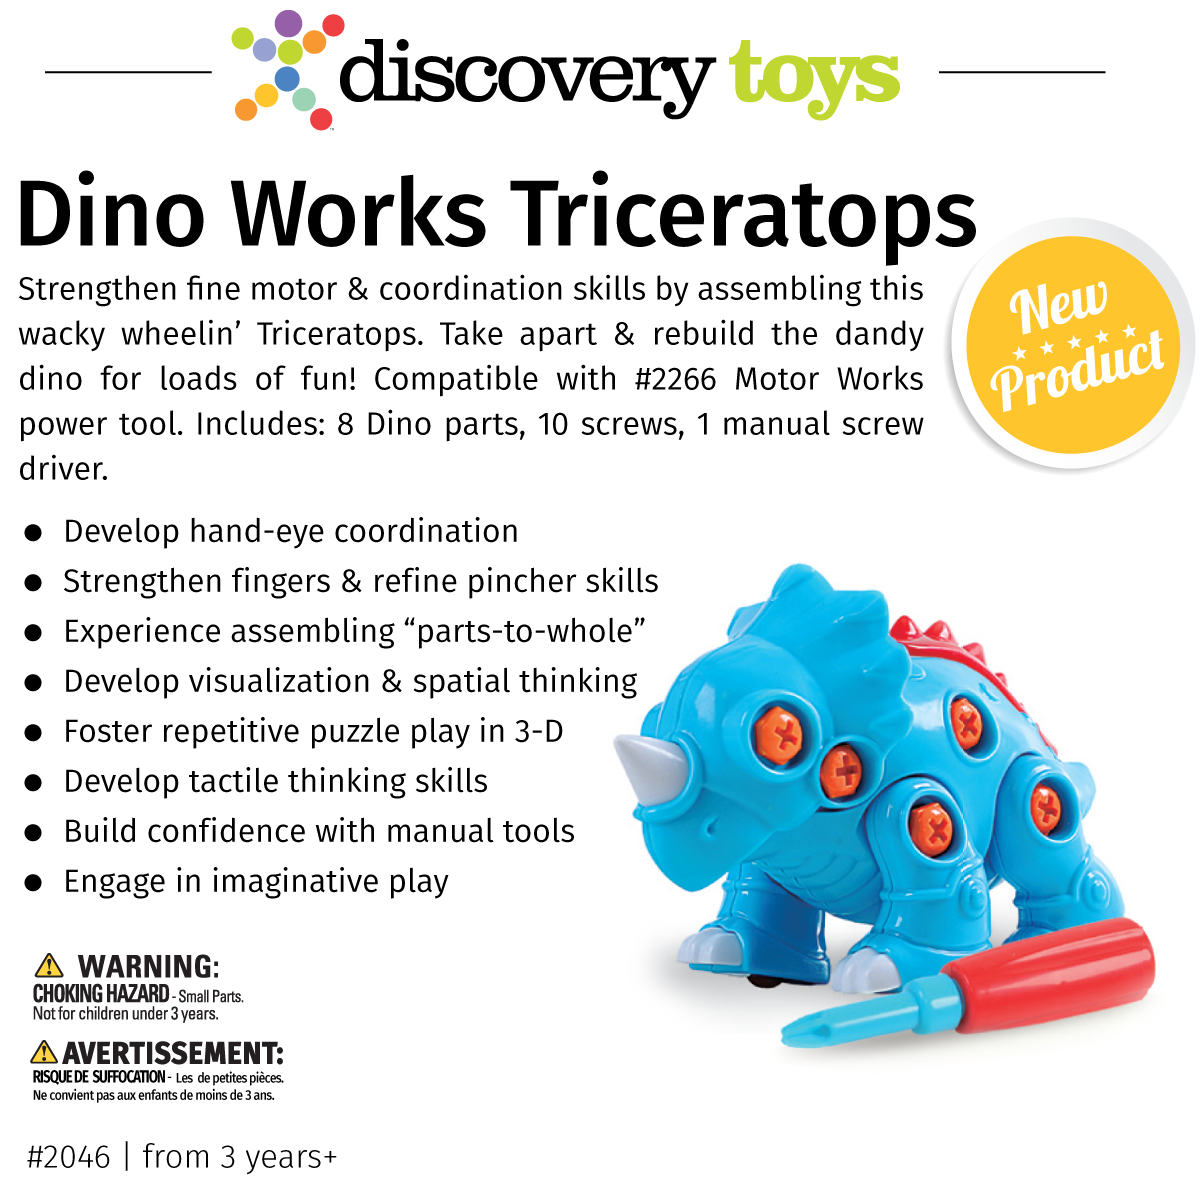 discovery toys catalog